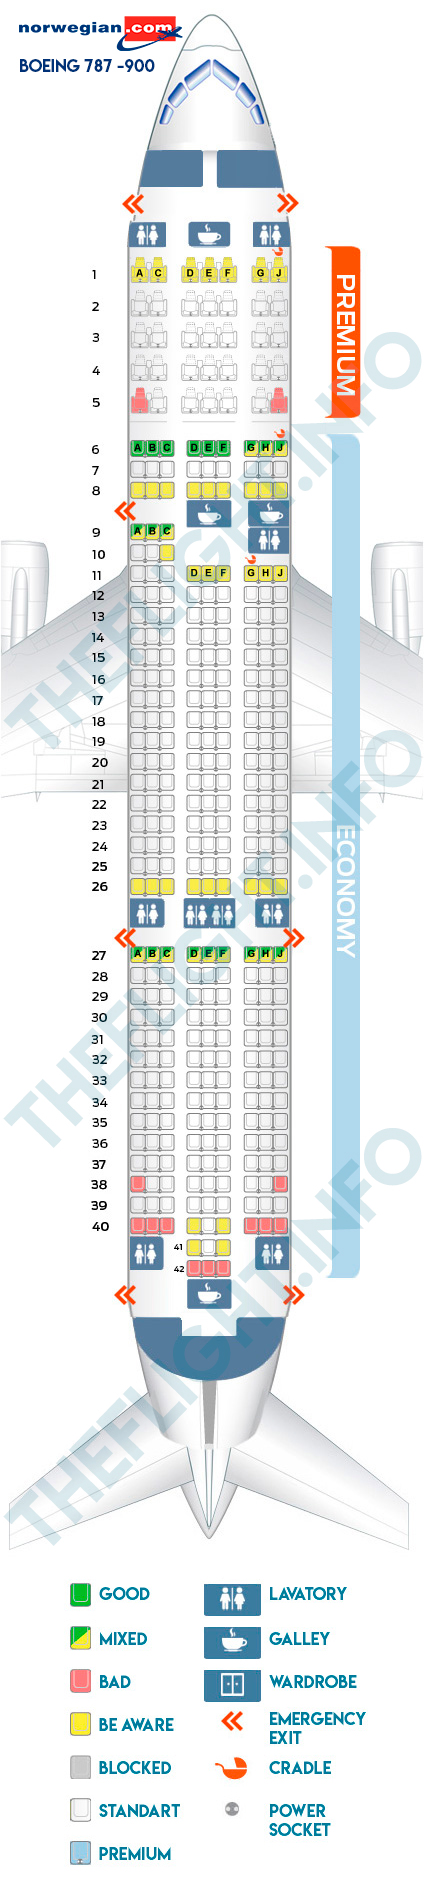 Norwegian Air Shuttle Seating Chart